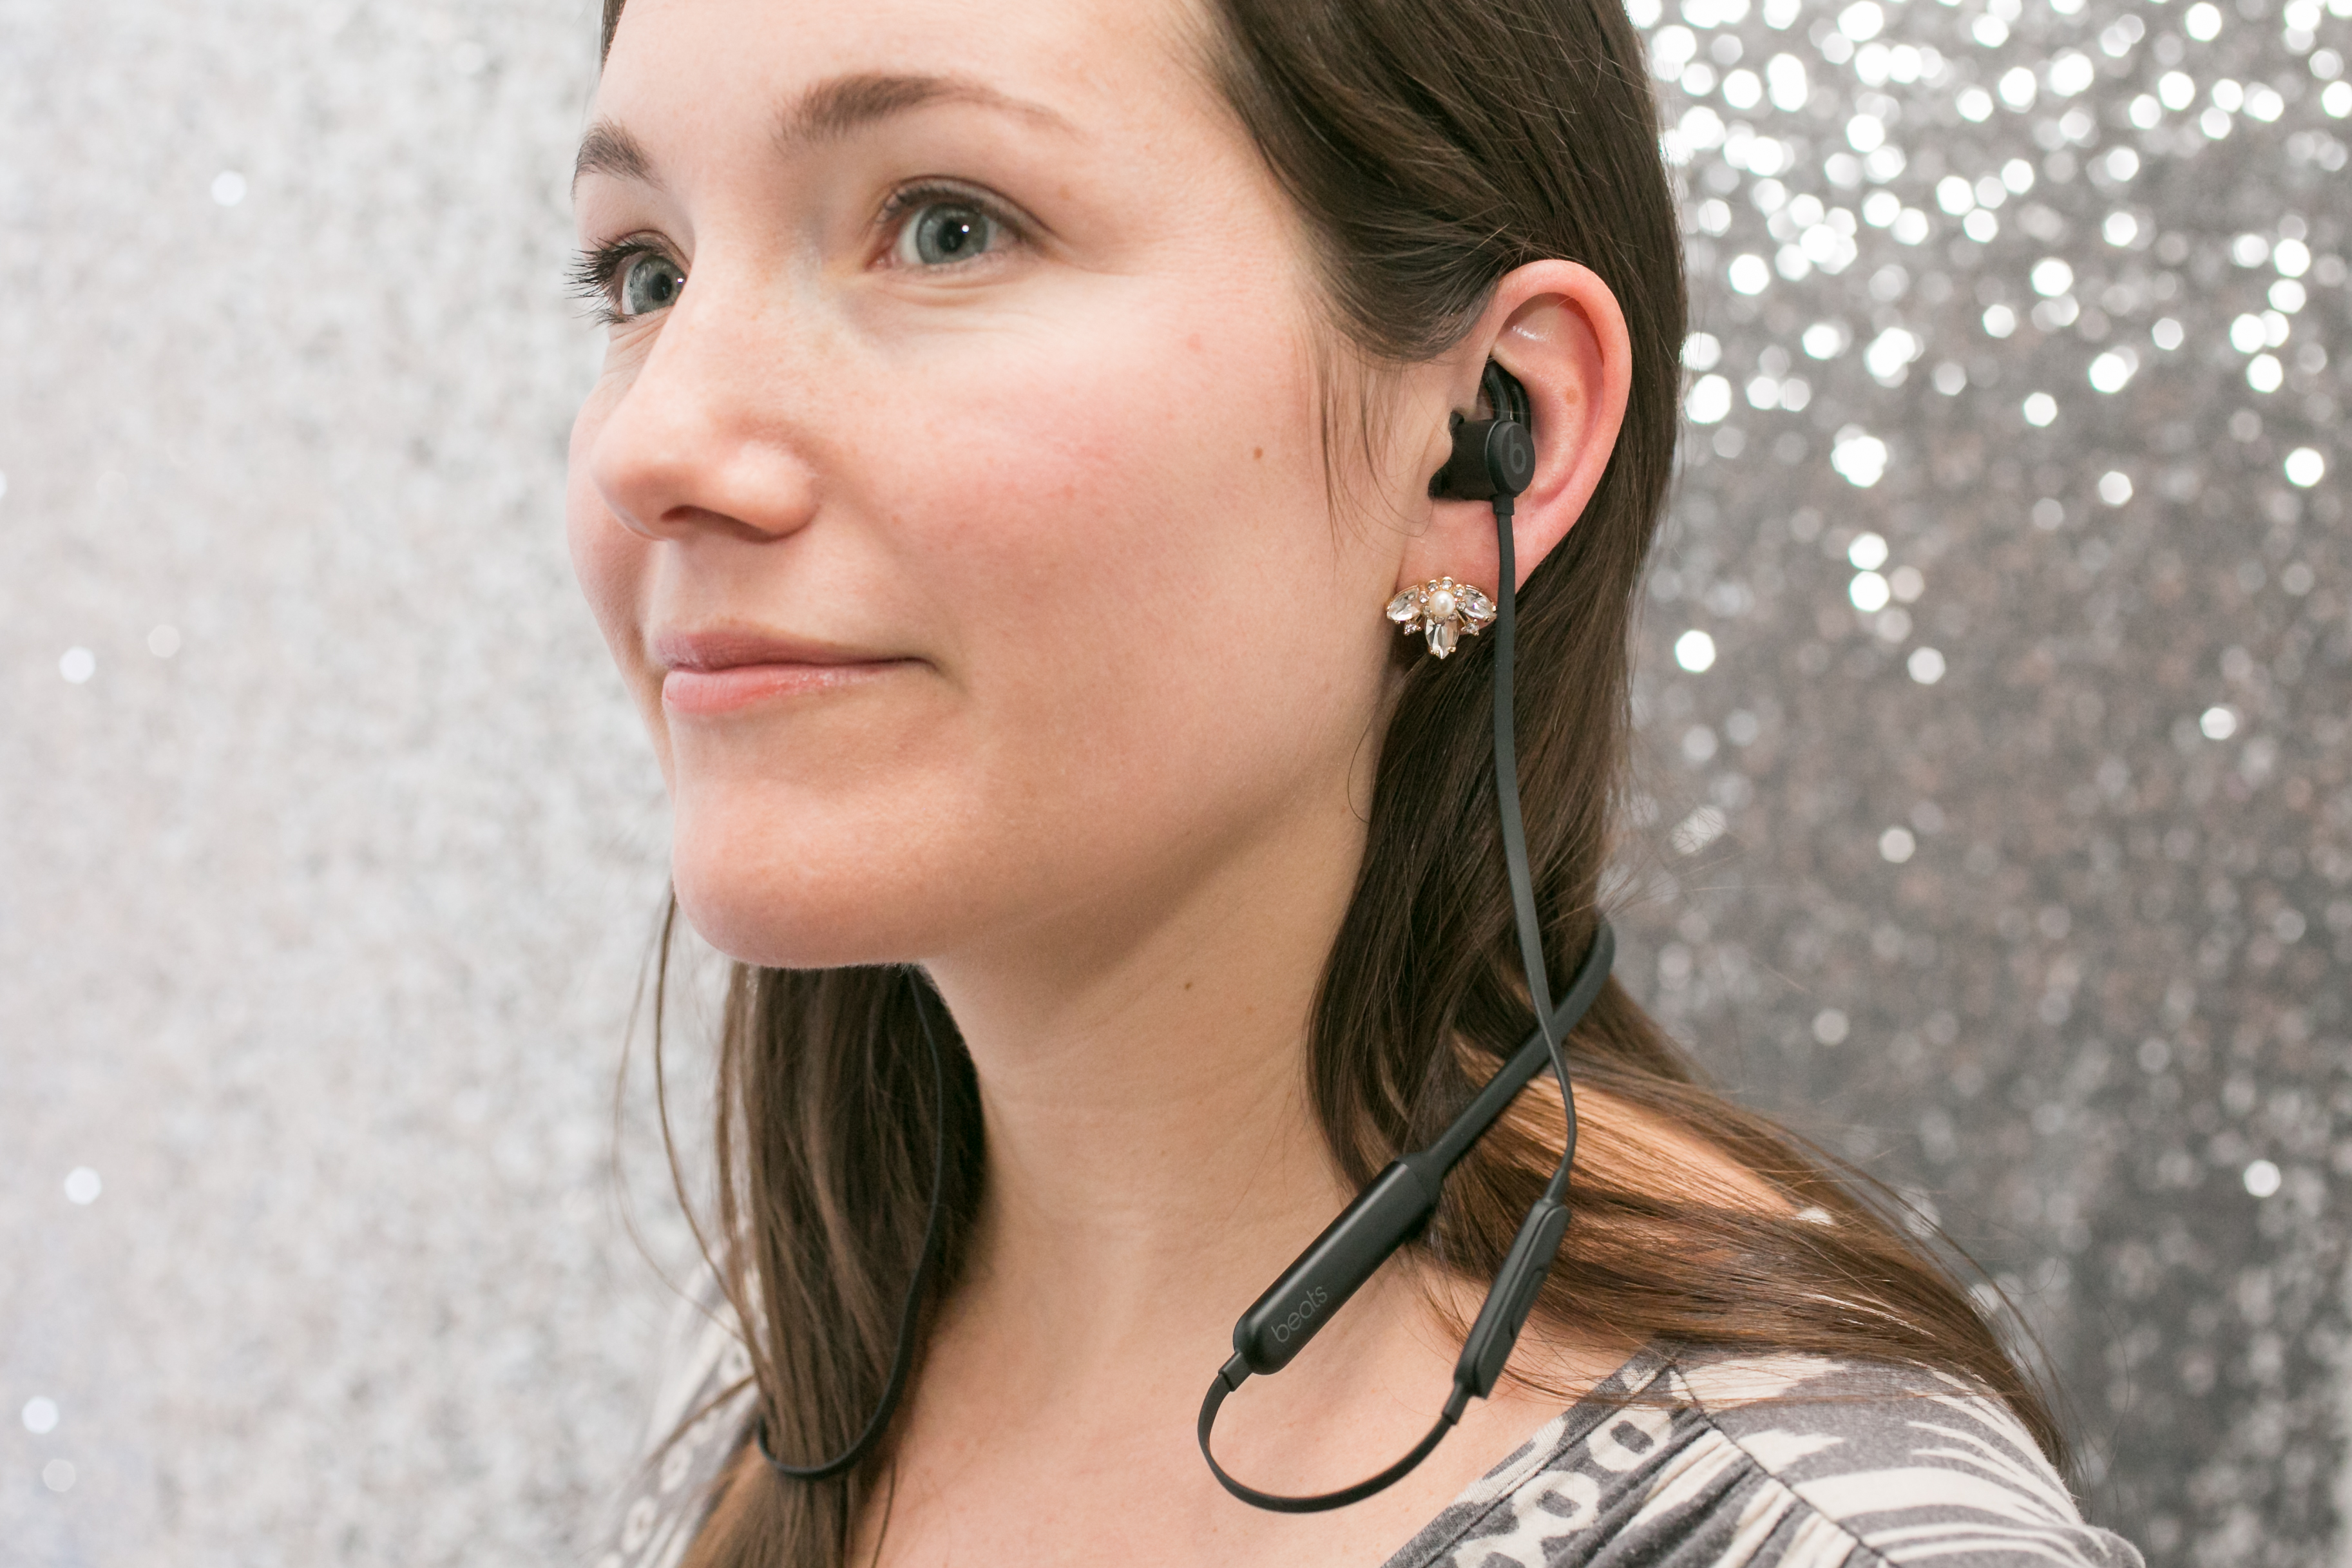 wireless beatsx earbuds